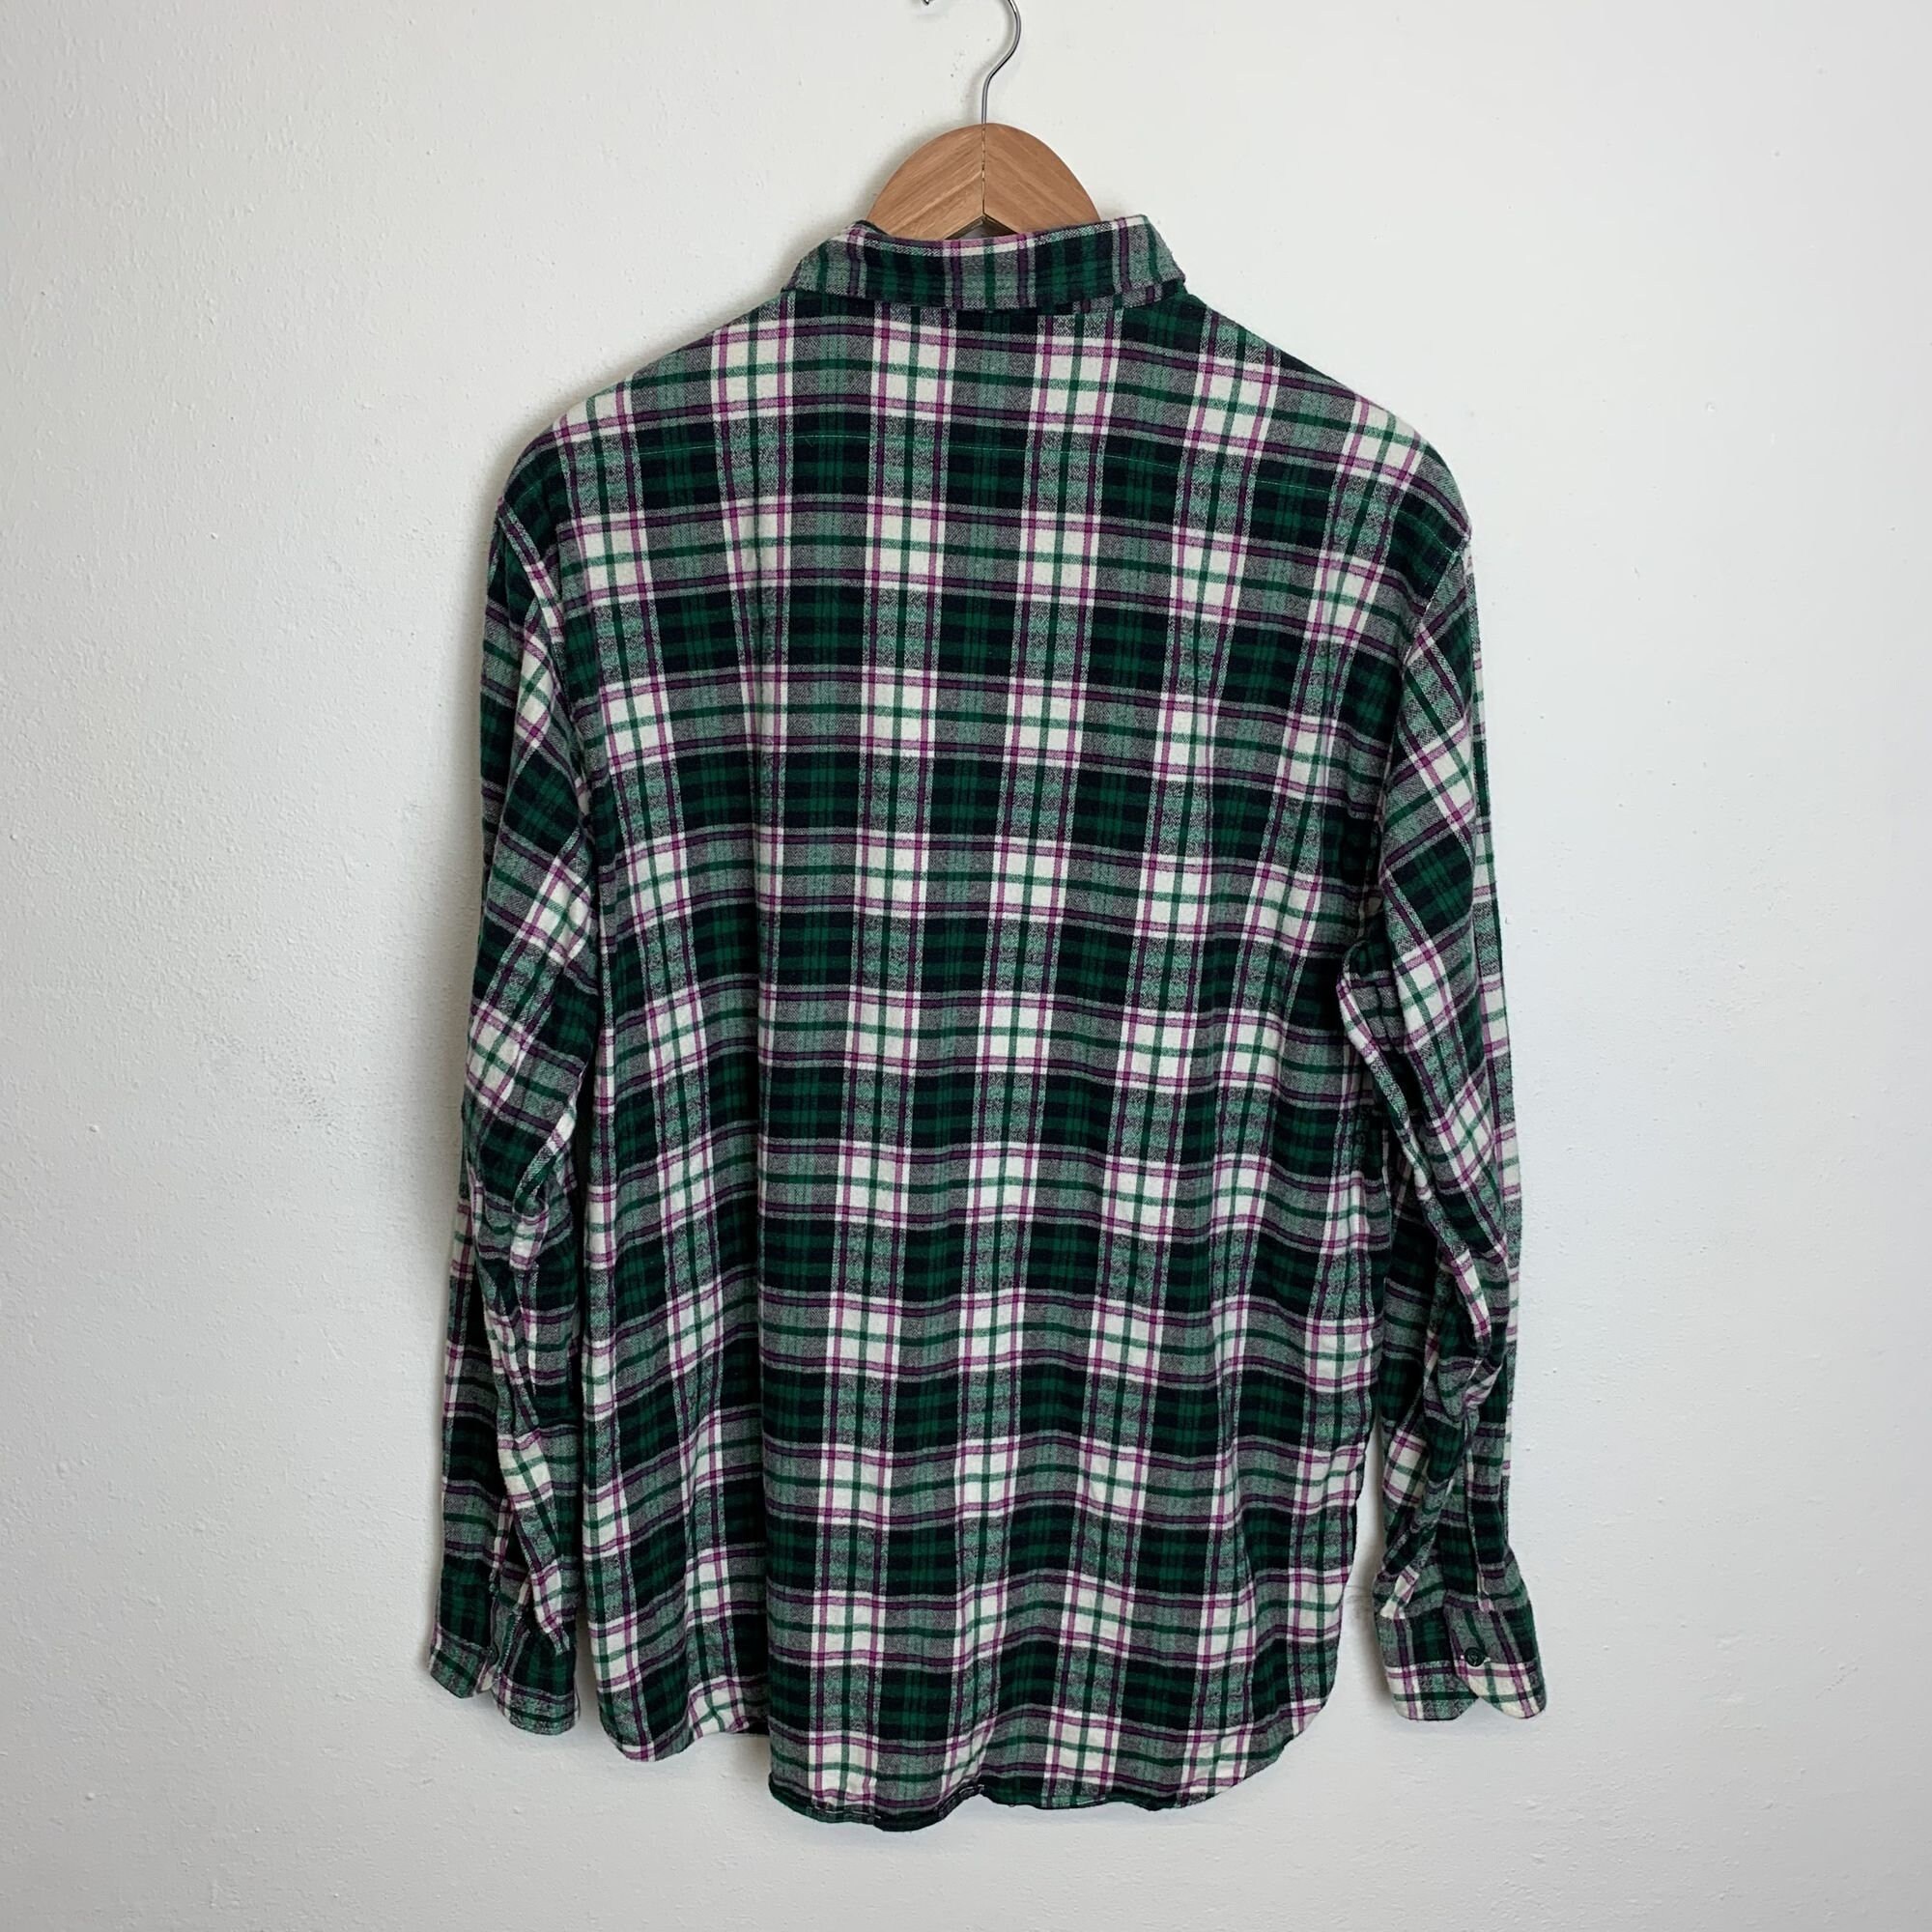 Vintage 80s flannel shirt shirt long sleeve plaid | Etsy